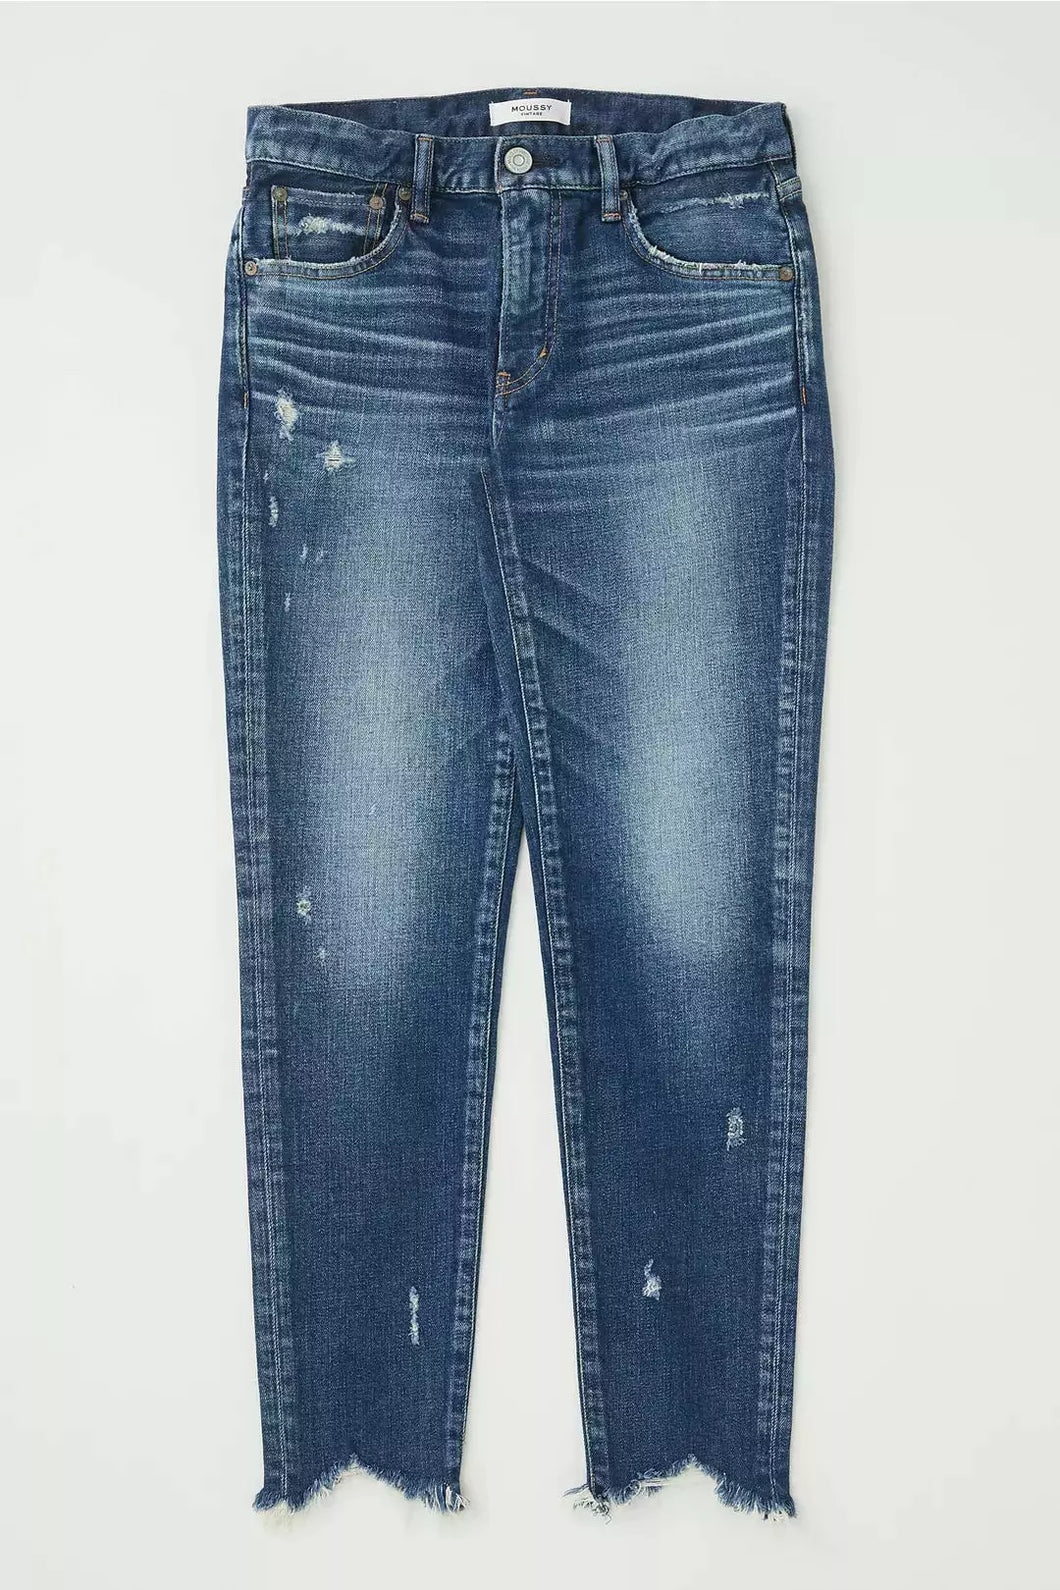 moussy daleville jeans at west2westport.com